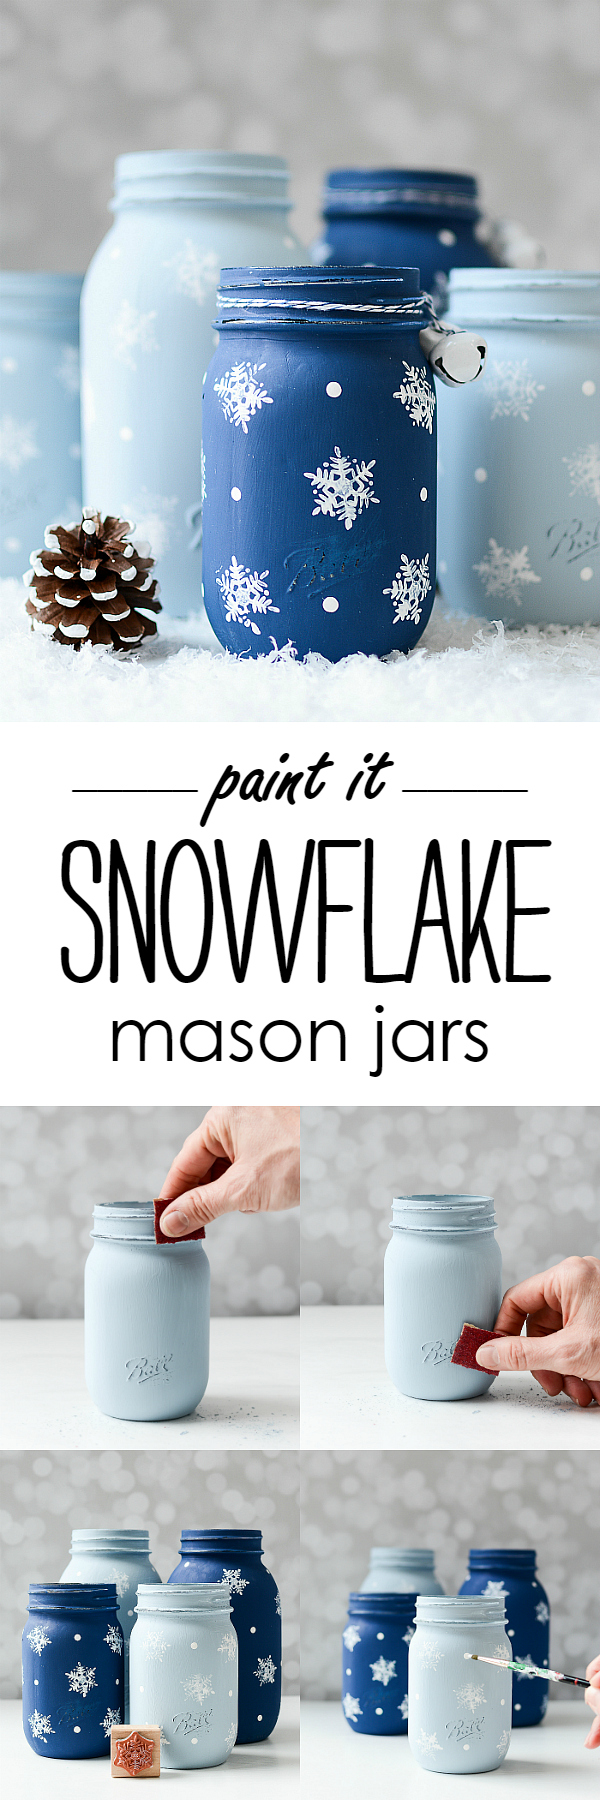 Snowflake Mason Jars - Stamped Snowflake Painted Mason Jars @It All Started With Paint blog